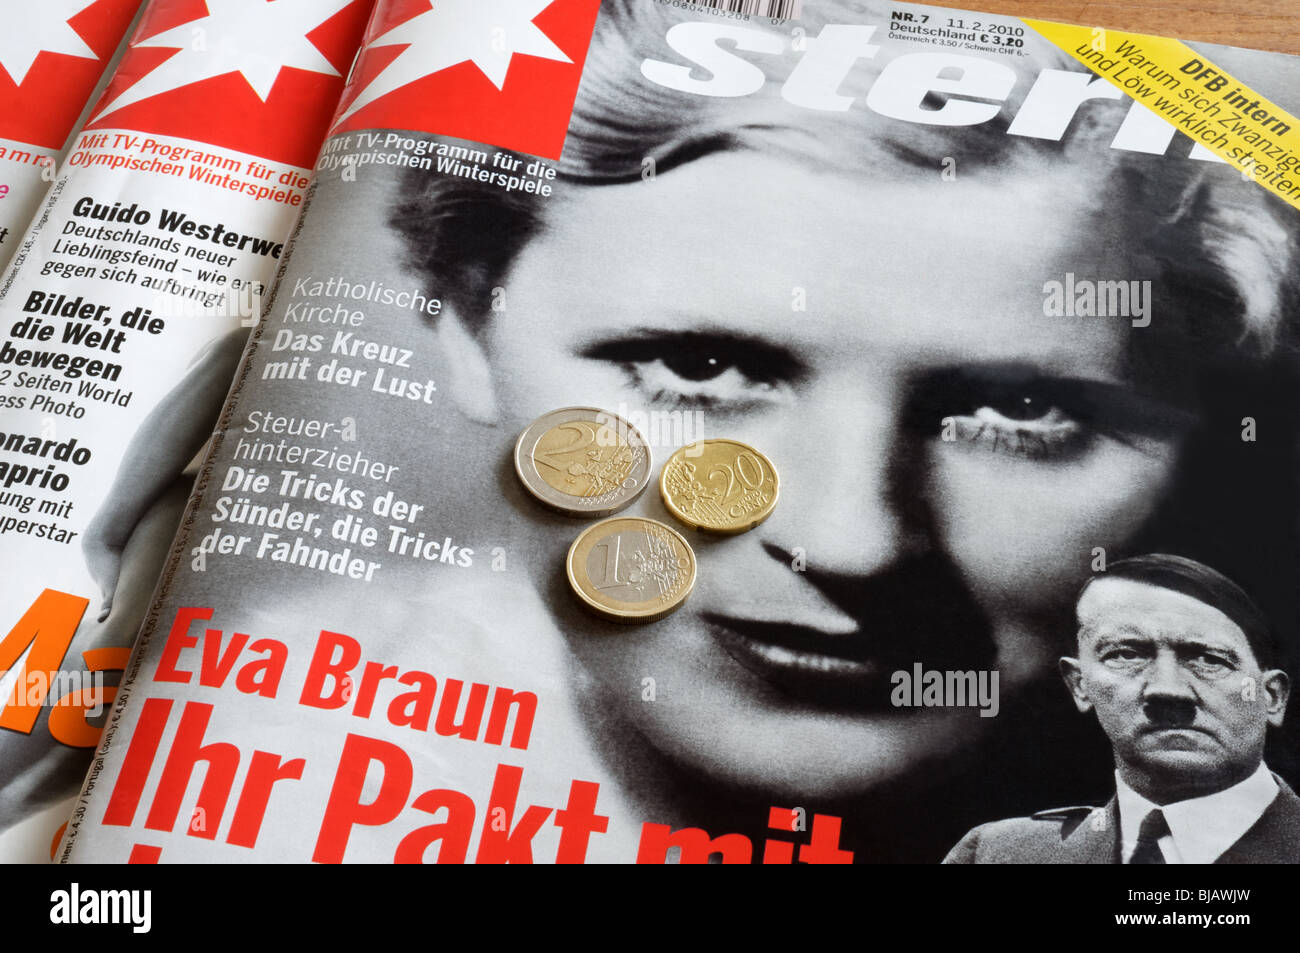 Stern, German weekly news magazine Stock Photo